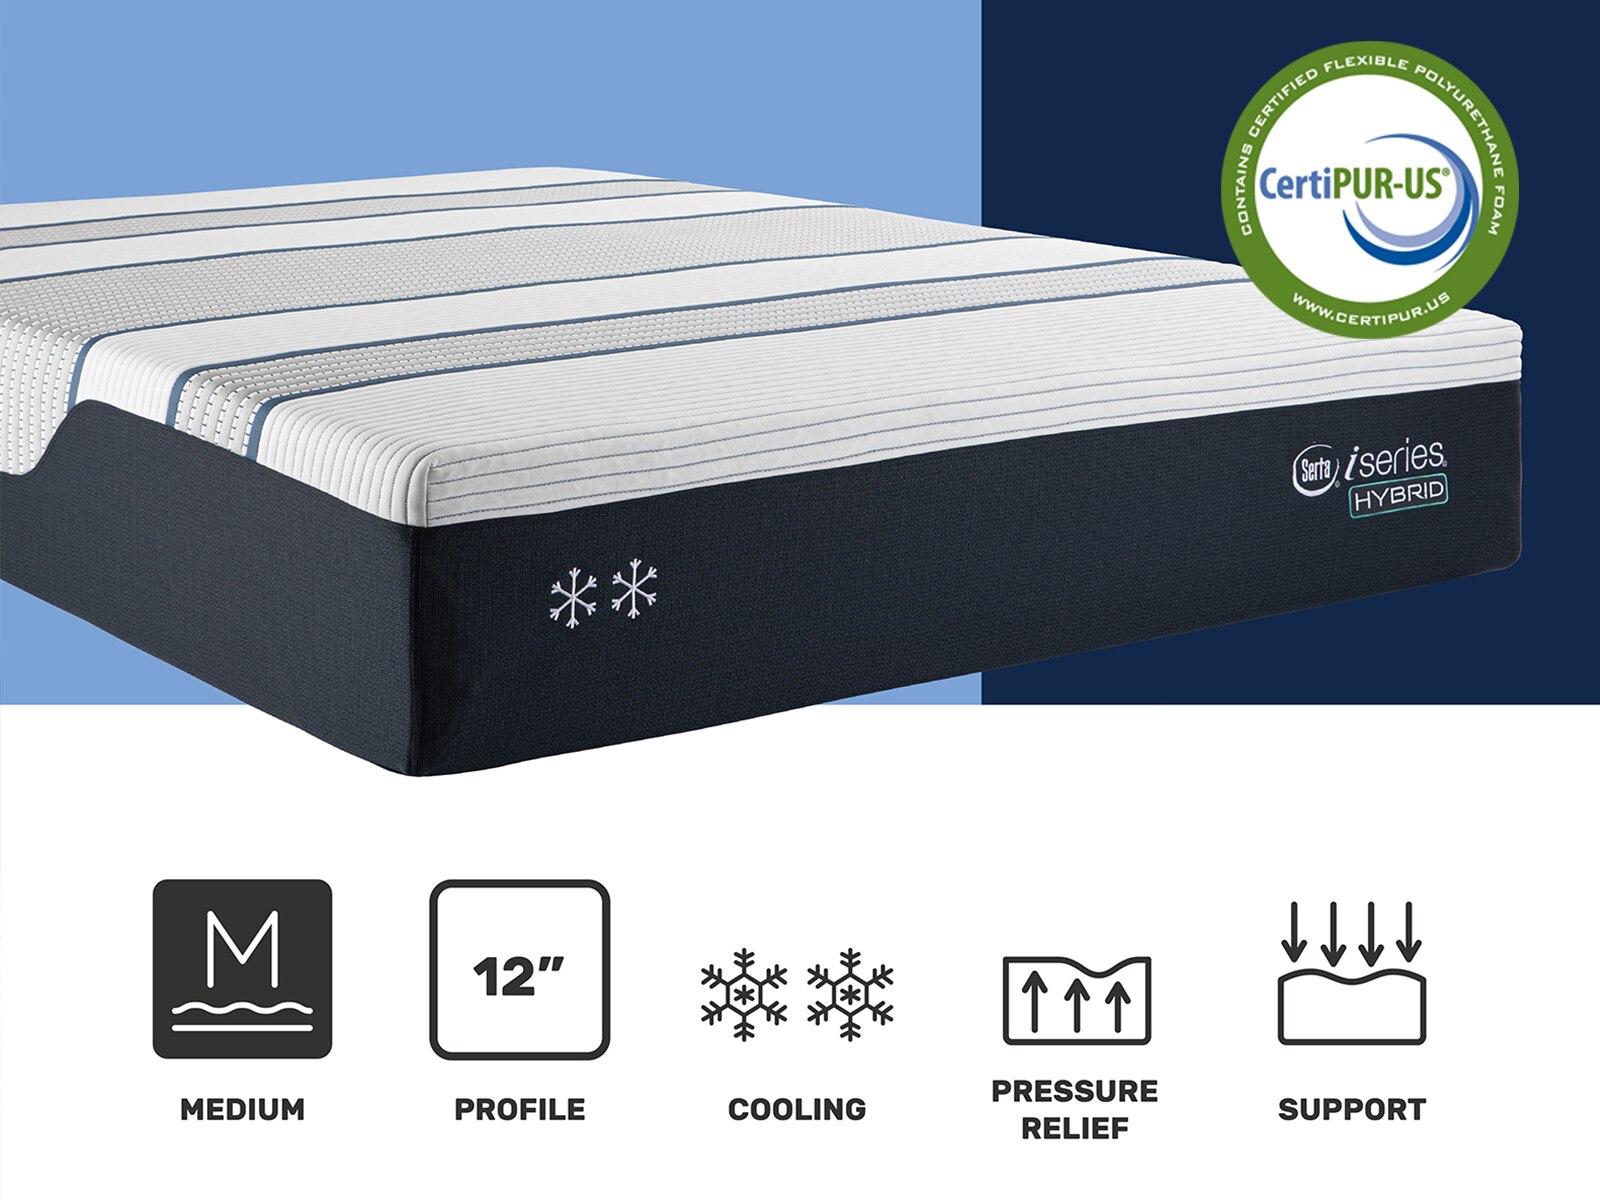 serta iseries profiles cushion firm mattress review